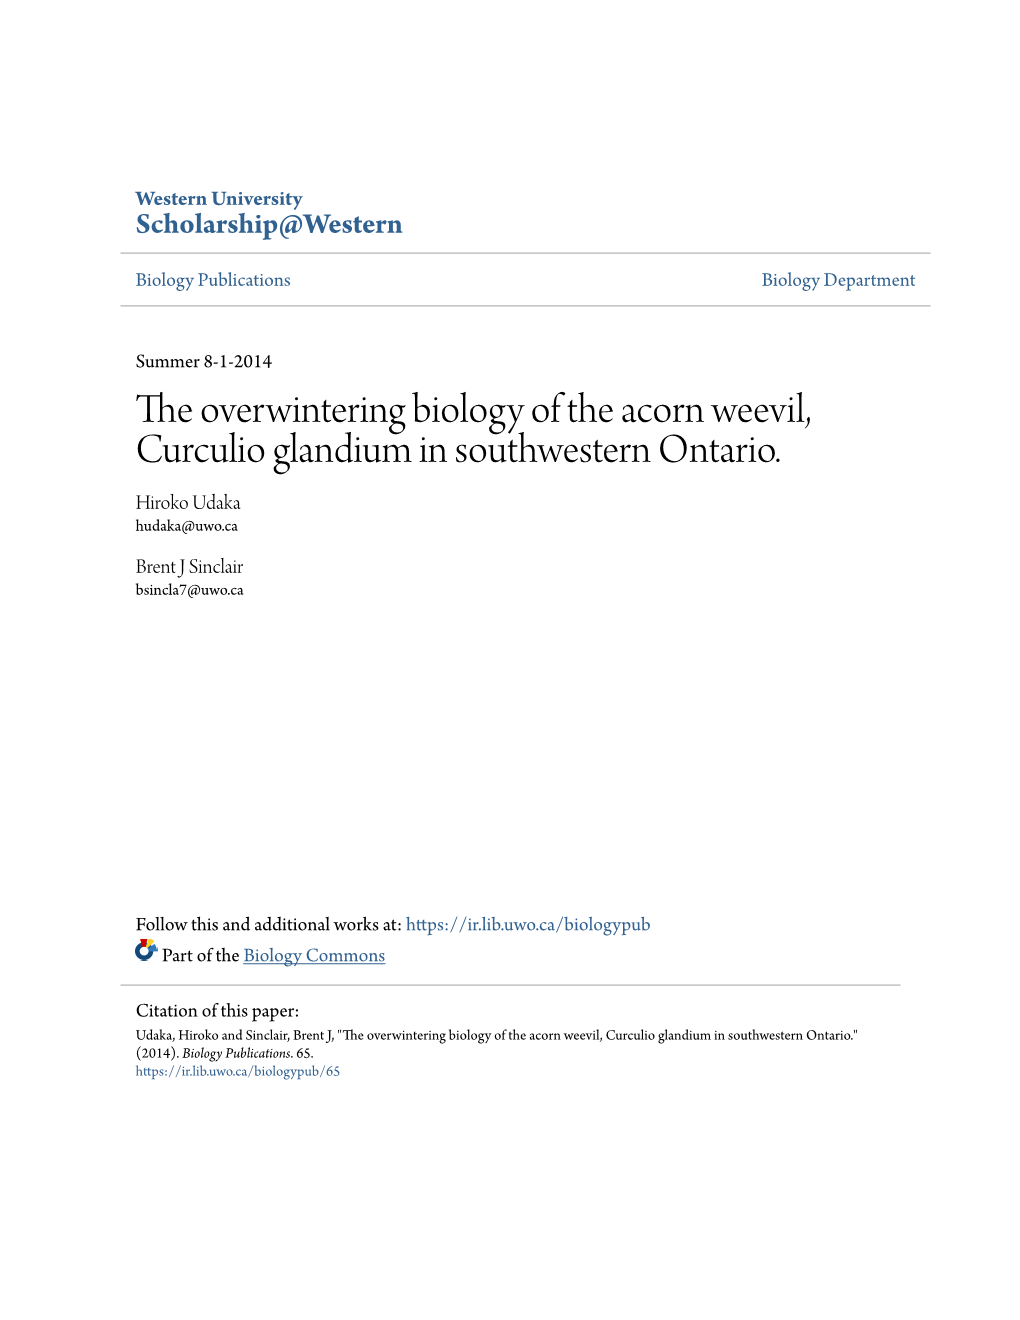 The Overwintering Biology of the Acorn Weevil, Curculio Glandium in Southwestern